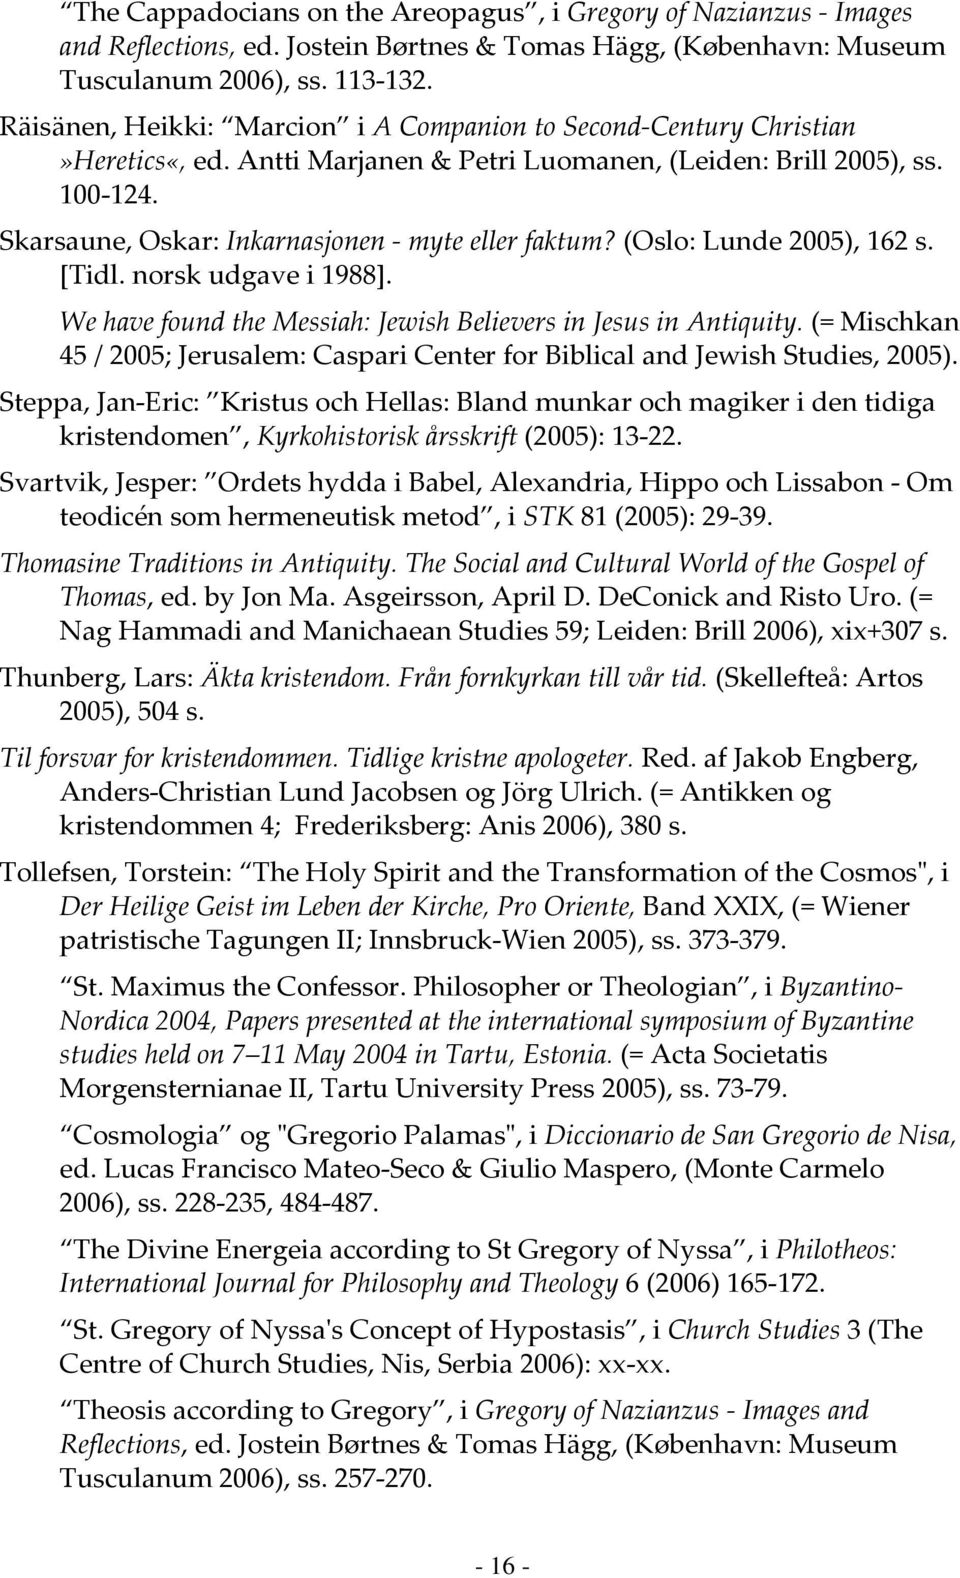 Skarsaune, Oskar: Inkarnasjonen - myte eller faktum? (Oslo: Lunde 2005), 162 s. [Tidl. norsk udgave i 1988]. We have found the Messiah: Jewish Believers in Jesus in Antiquity.